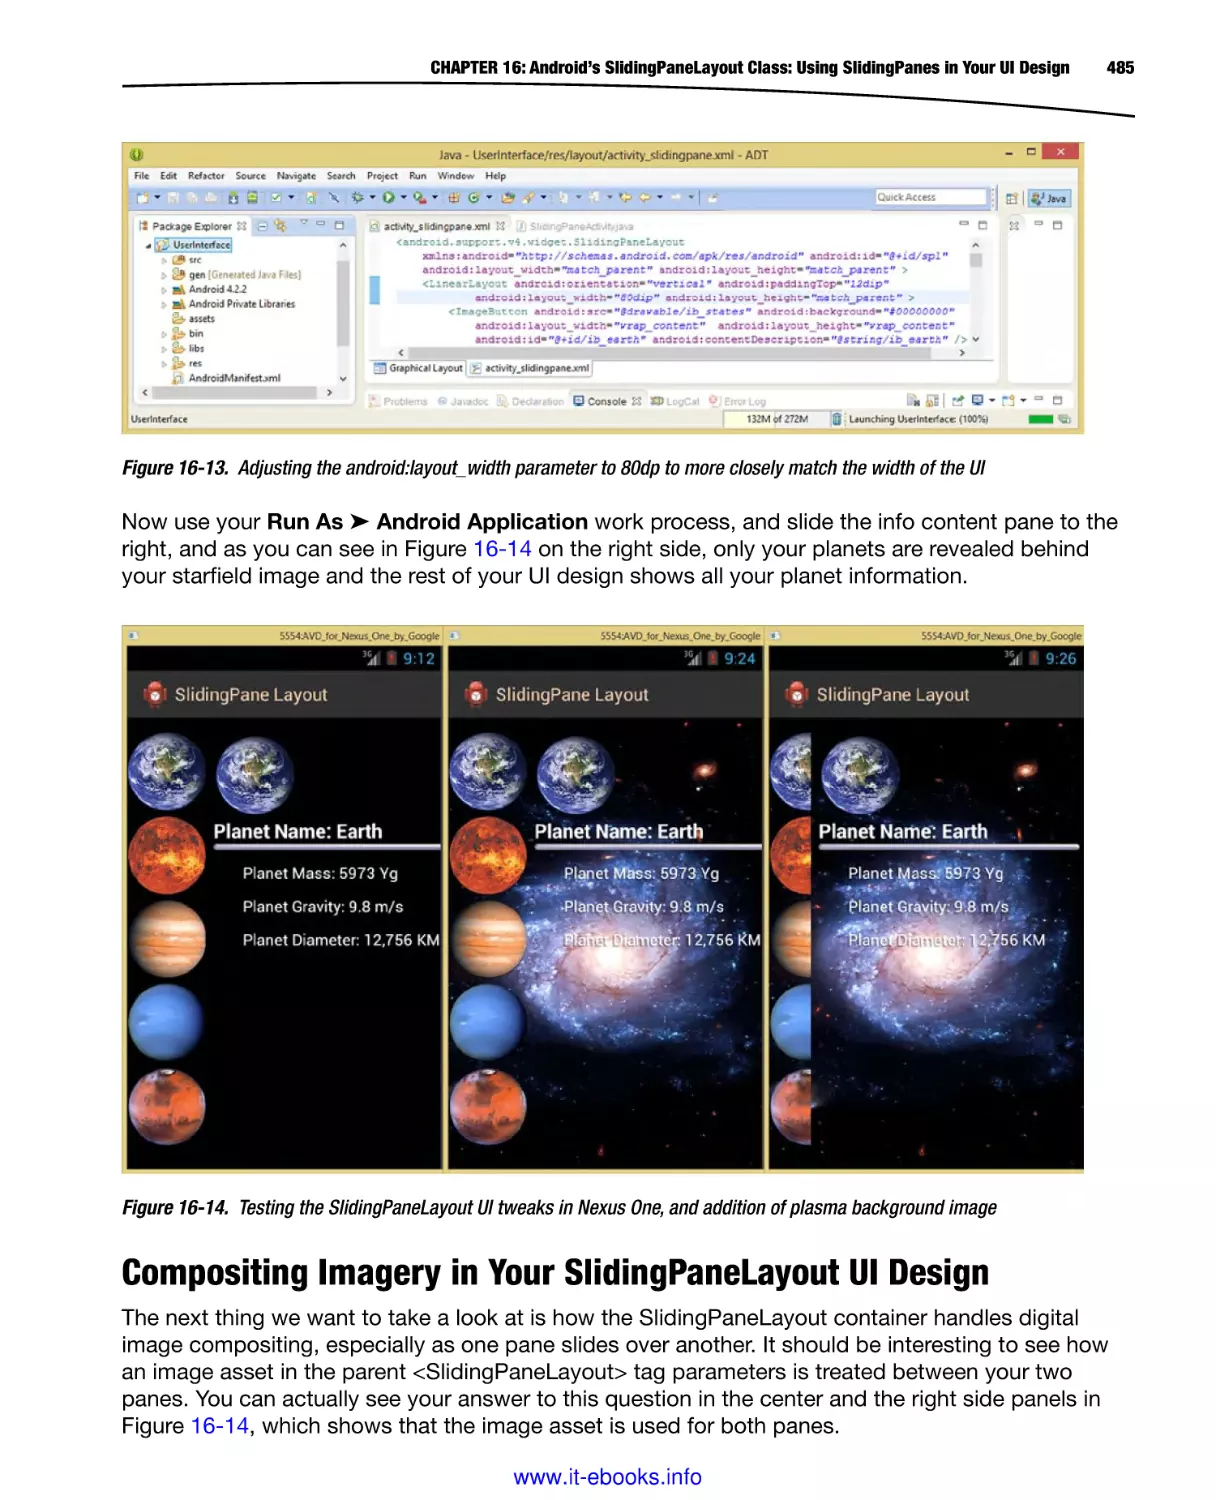 Compositing Imagery in Your SlidingPaneLayout UI Design